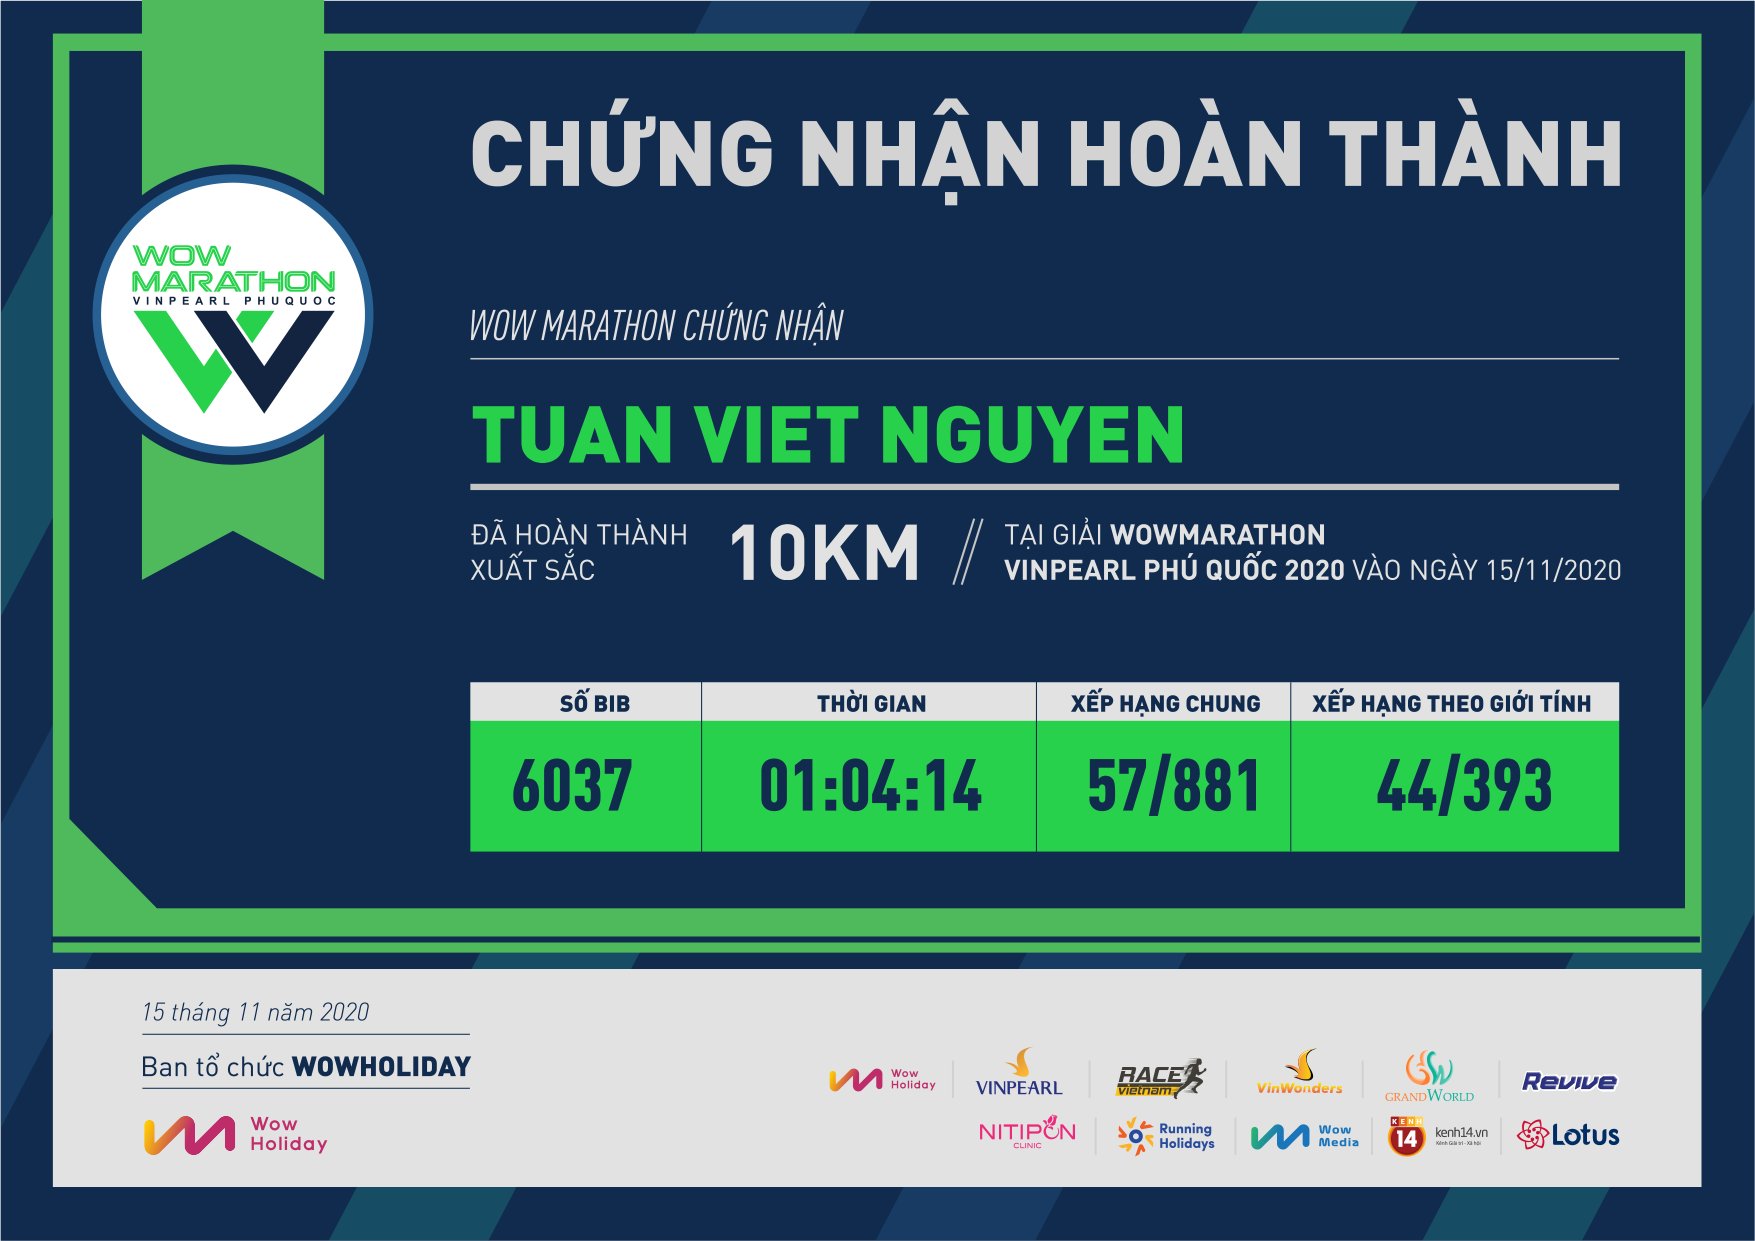 6037 - Tuan Viet Nguyen